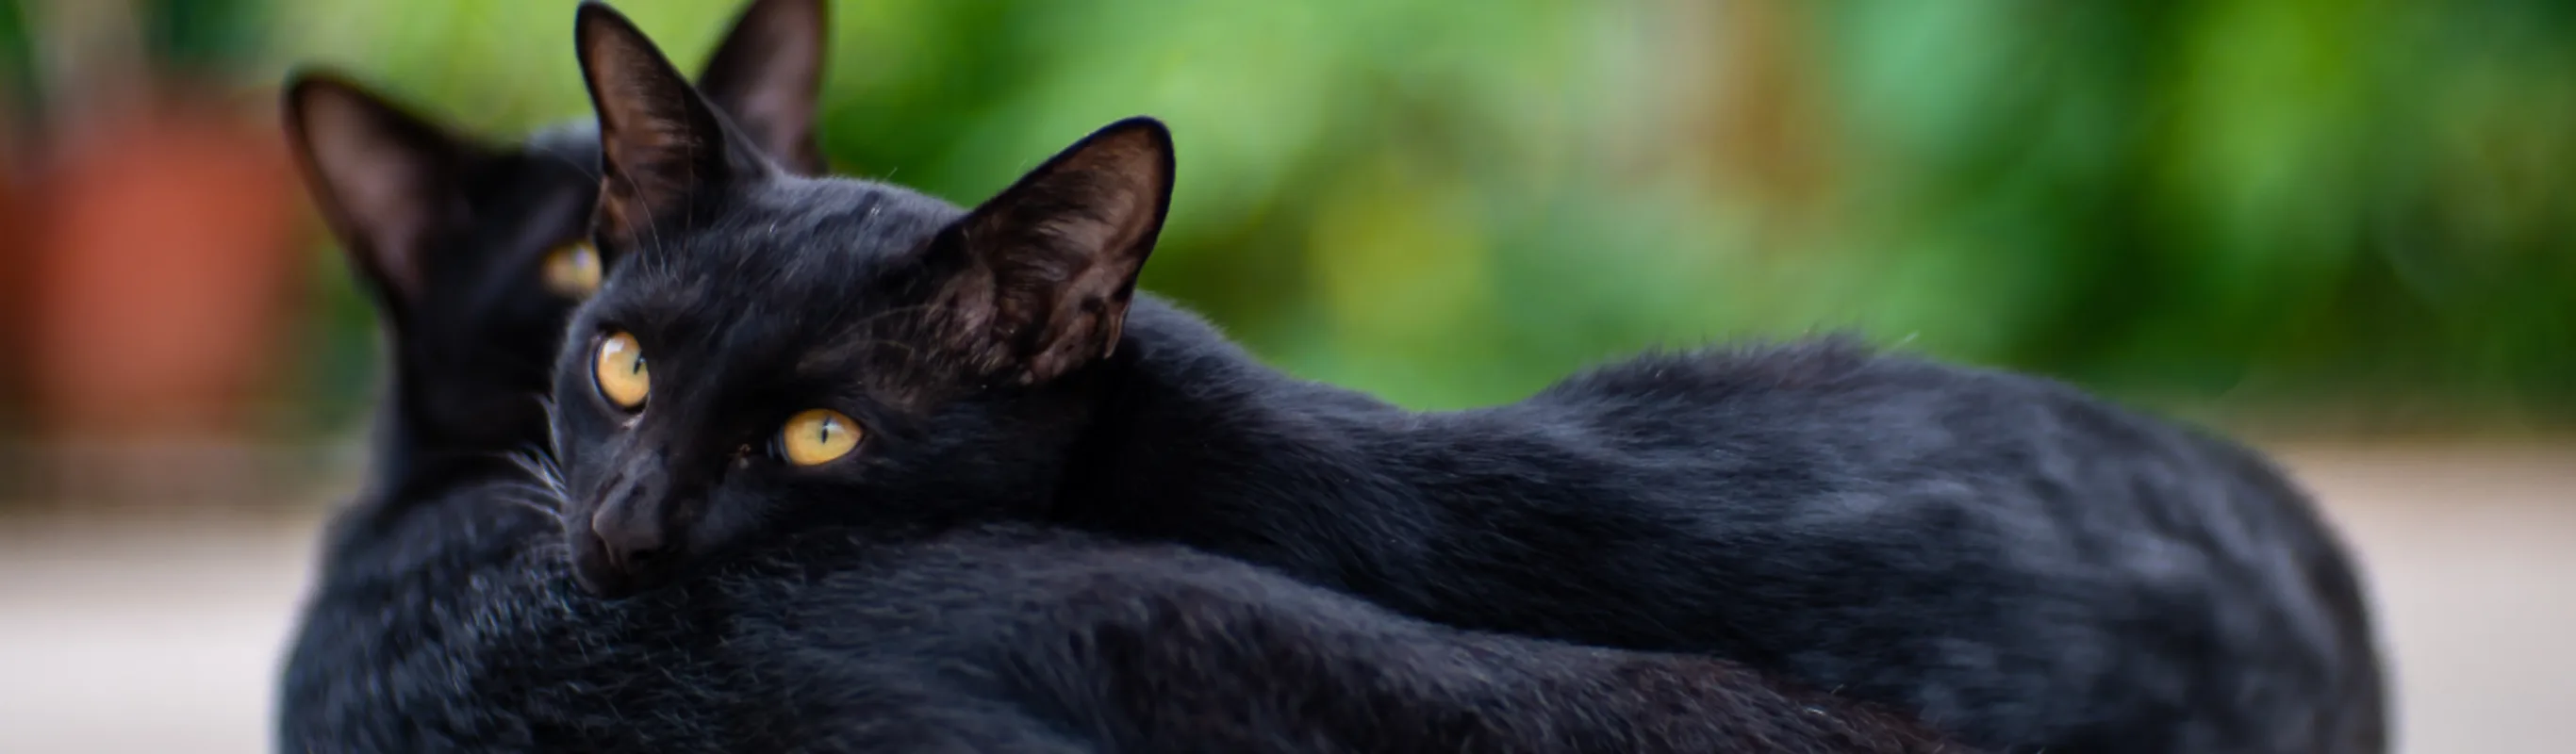 Black Cats Cuddling